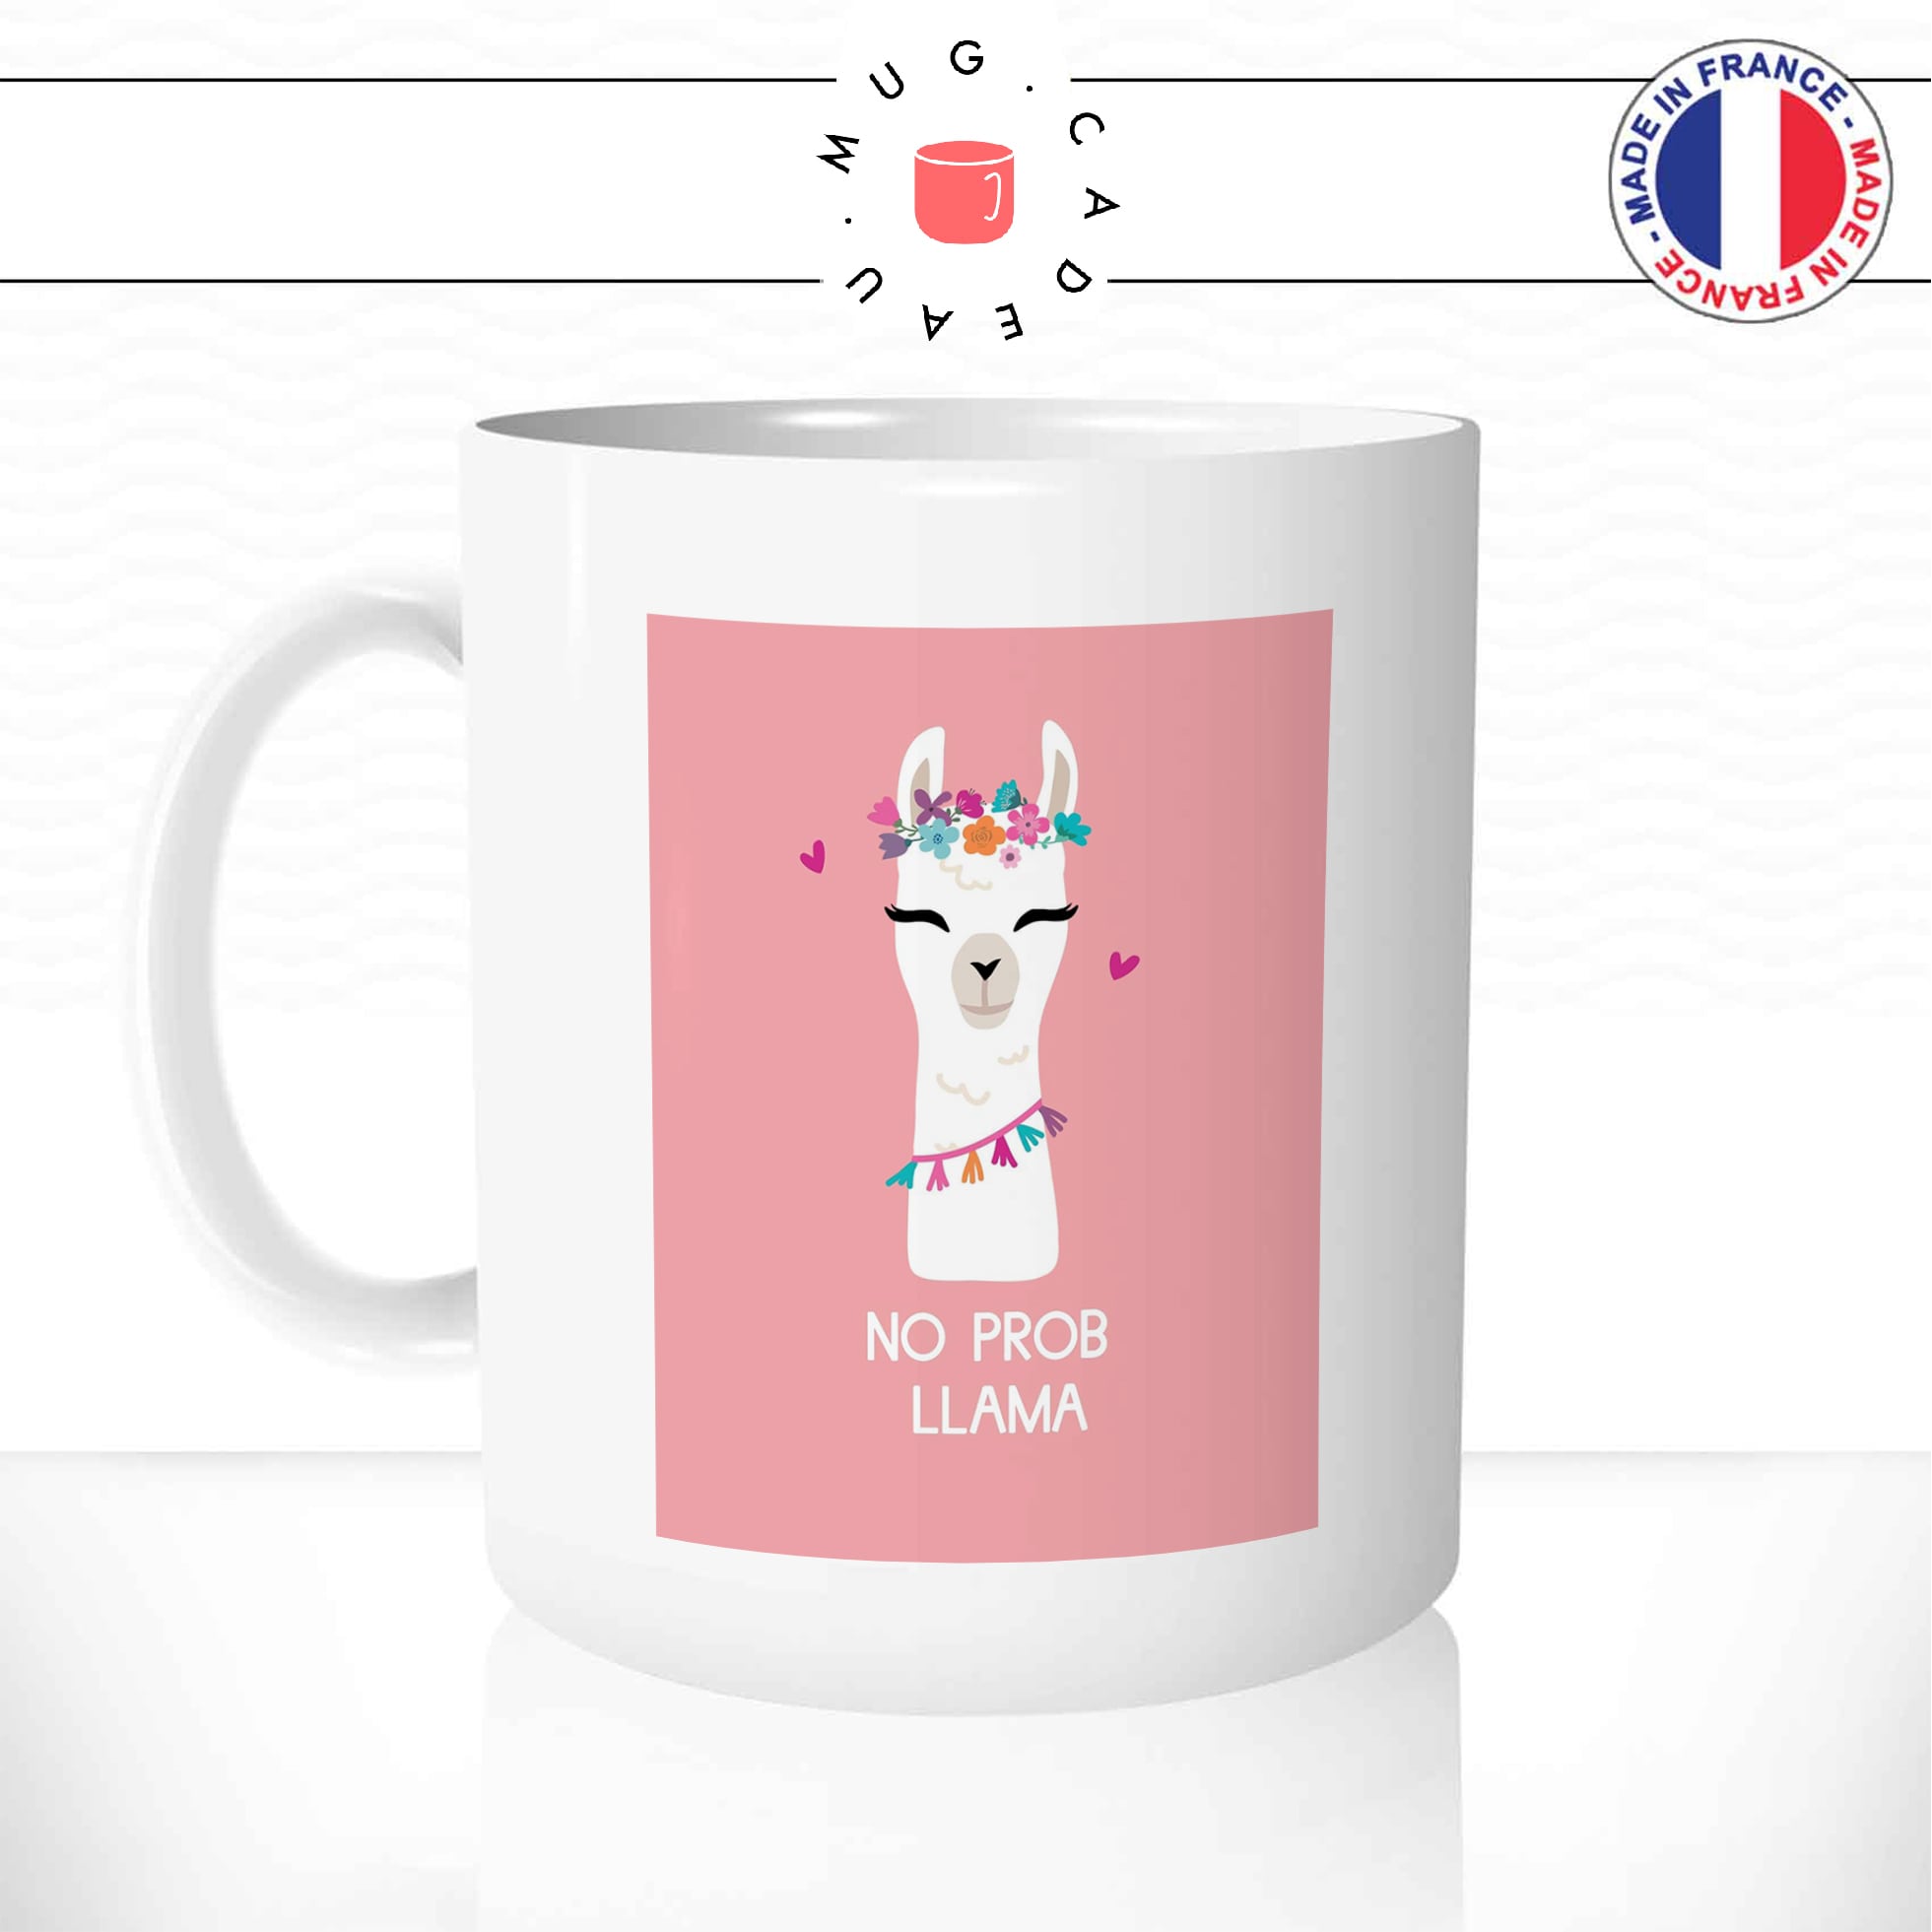 mug-tasse-animal-no-prob-llama-lama-alpaga-mouton-dessin-cool-fun-mugs-tasses-café-thé-idée-cadeau-original-personnalisable